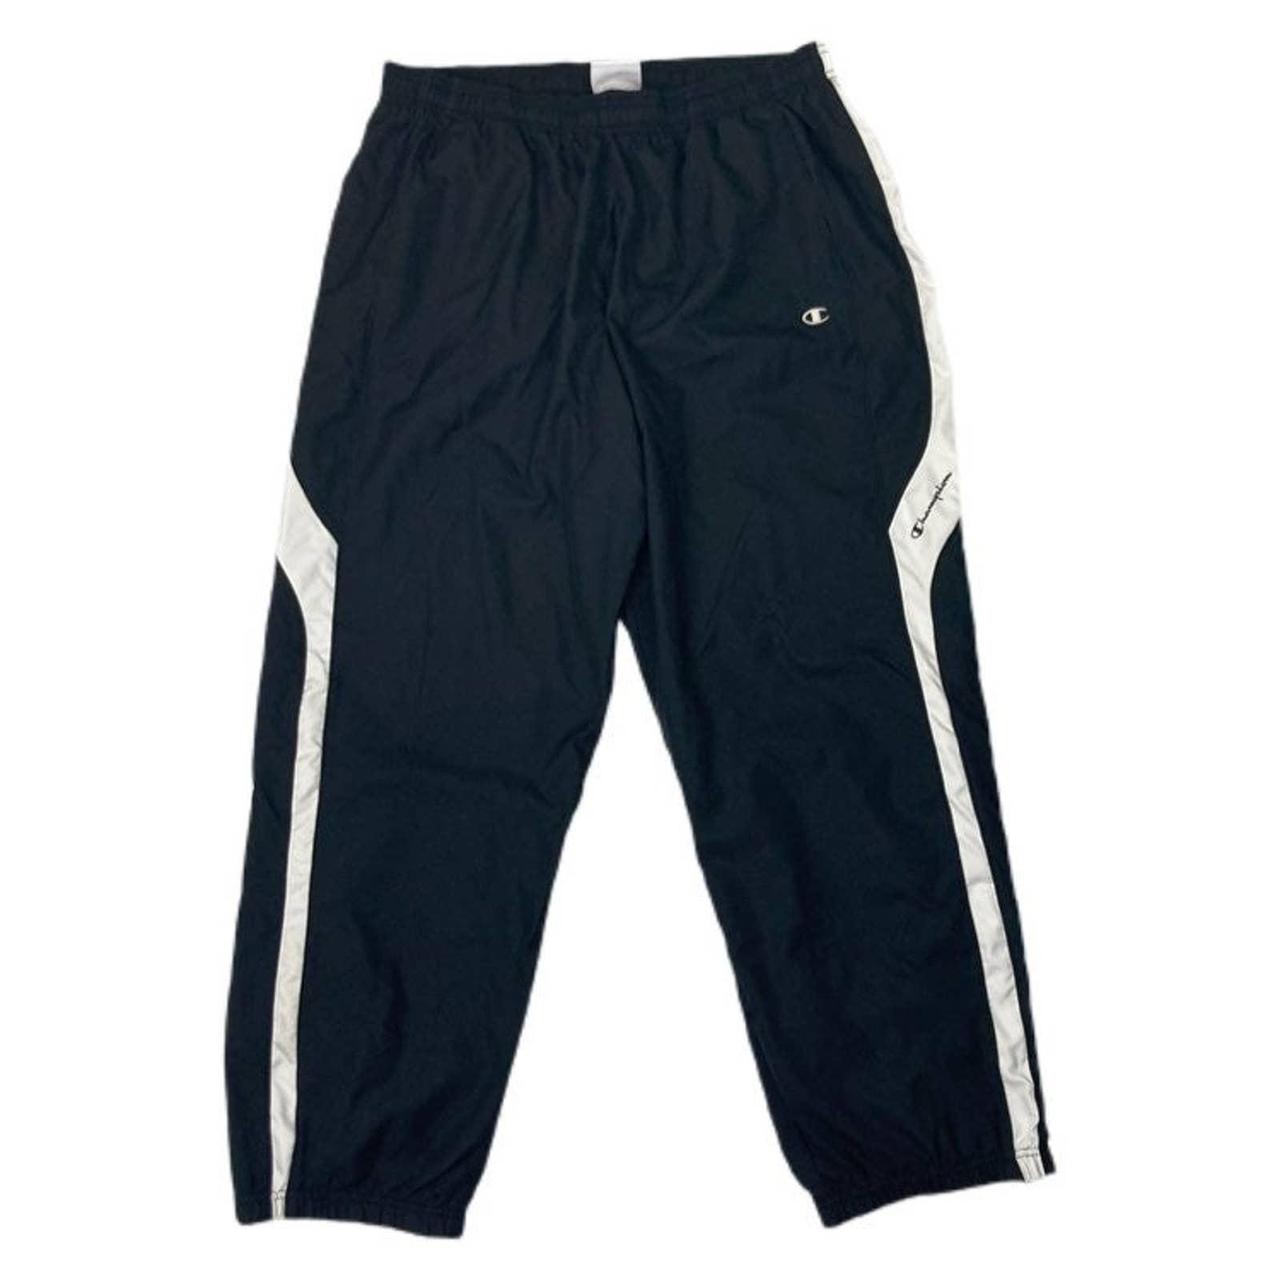 Vintage Champion Track Pants in size men’s XL.... - Depop